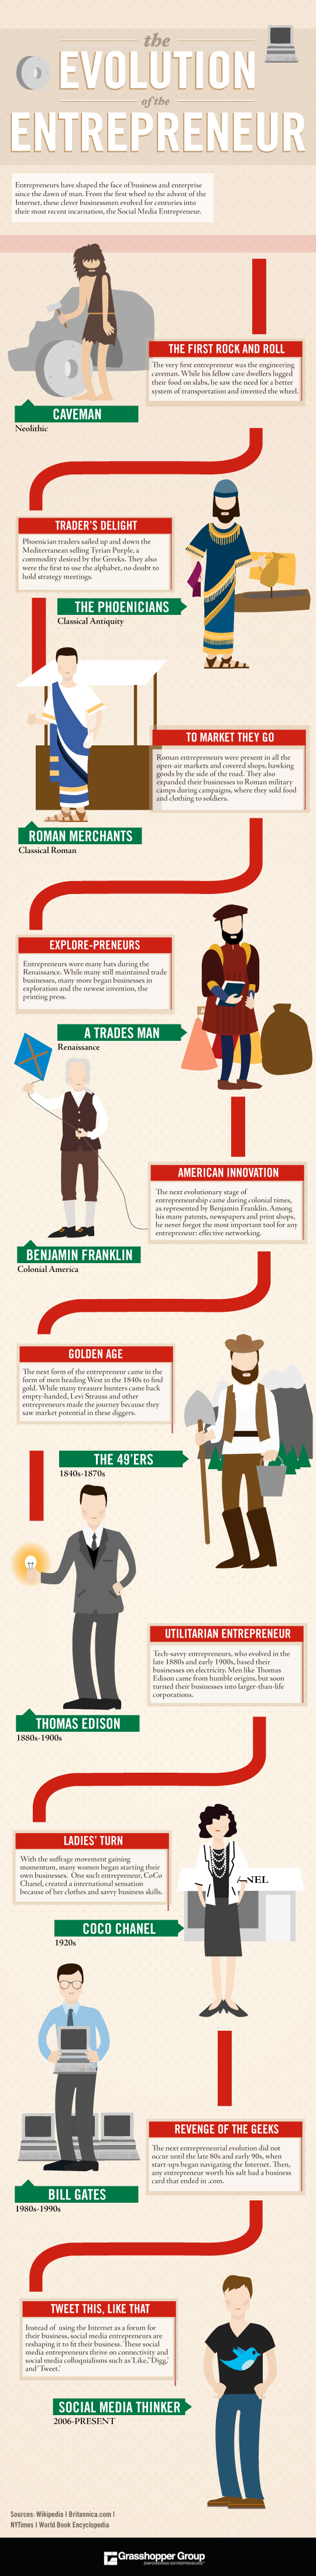 The Evolution of the Entrepreneur Infographic